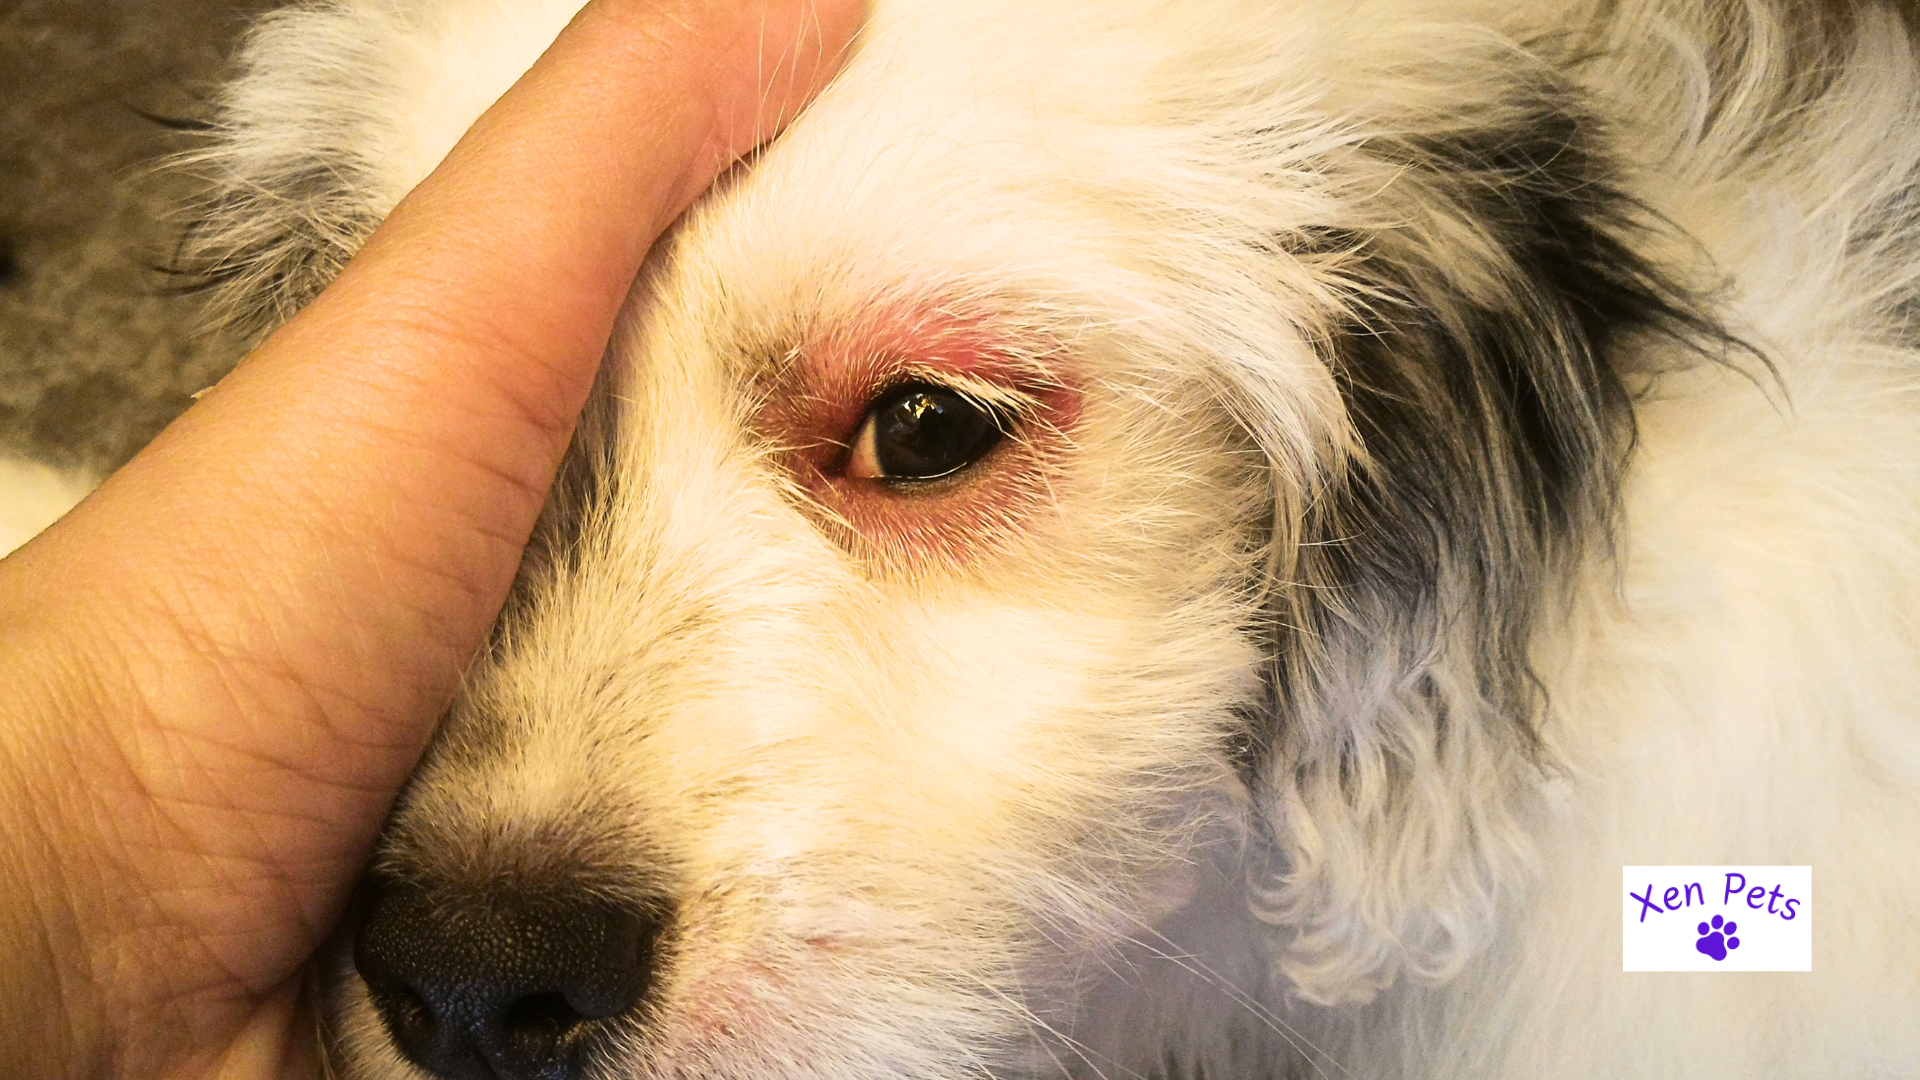 Dog's eye showing symptoms of allergies.